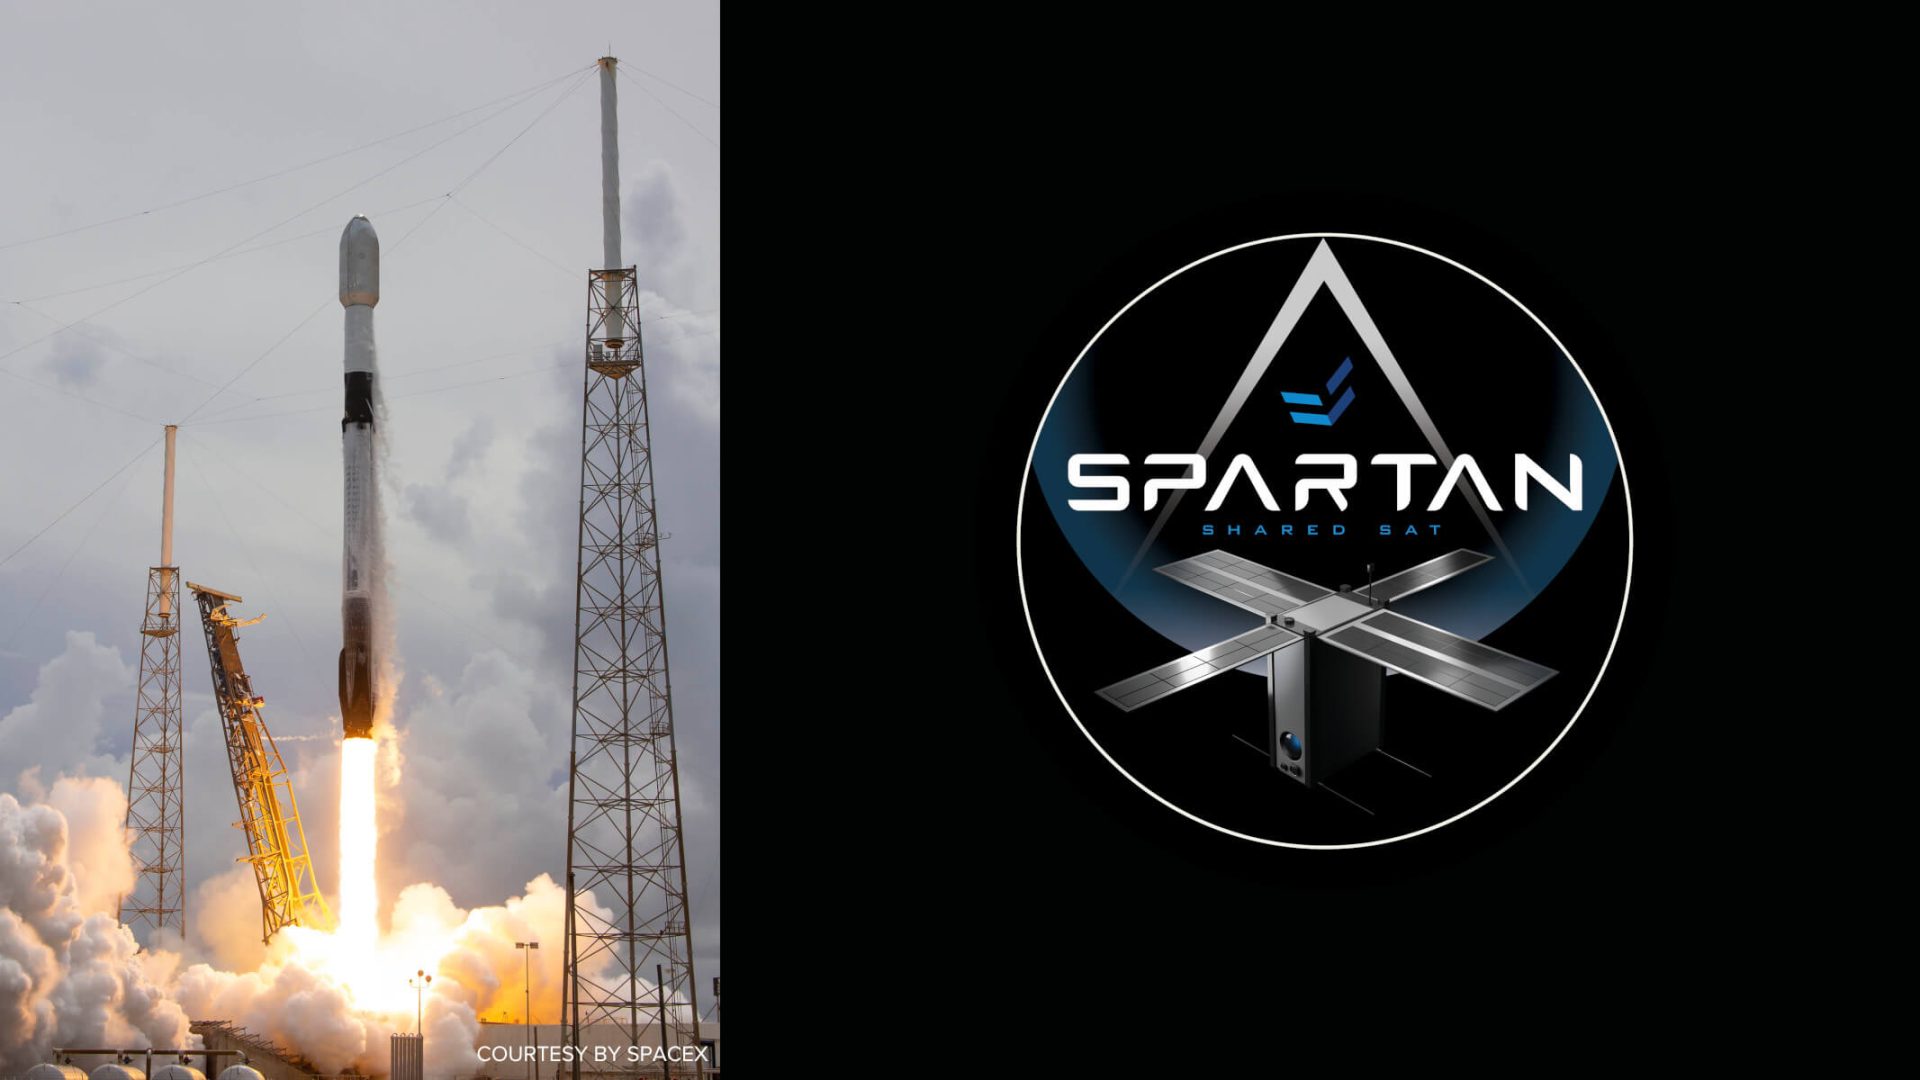 Transporter 2 mission endurosat spartan shared satellite launch